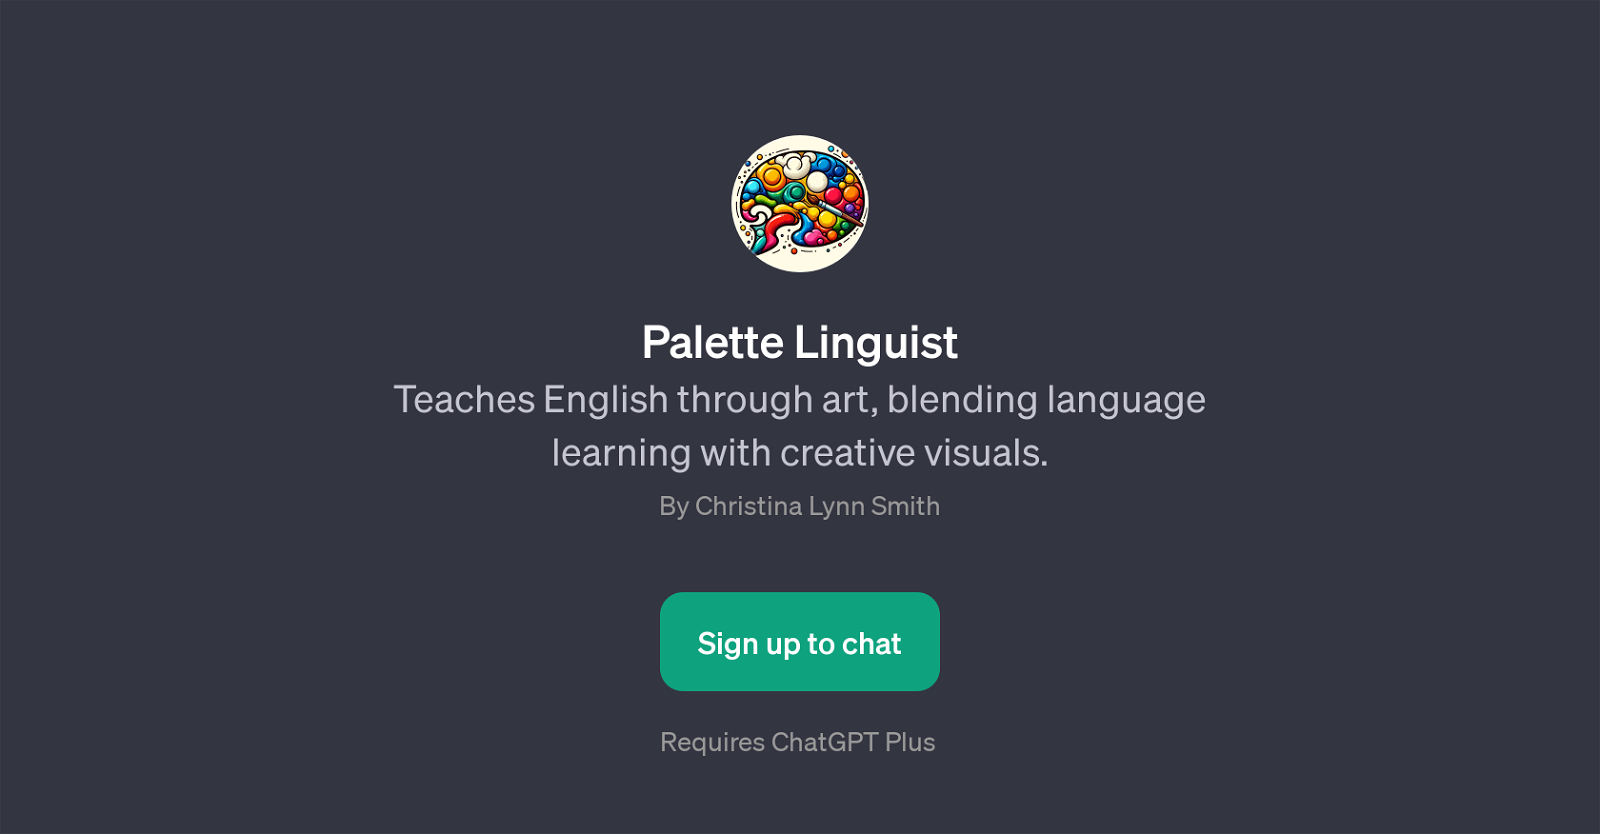 Palette Linguist website